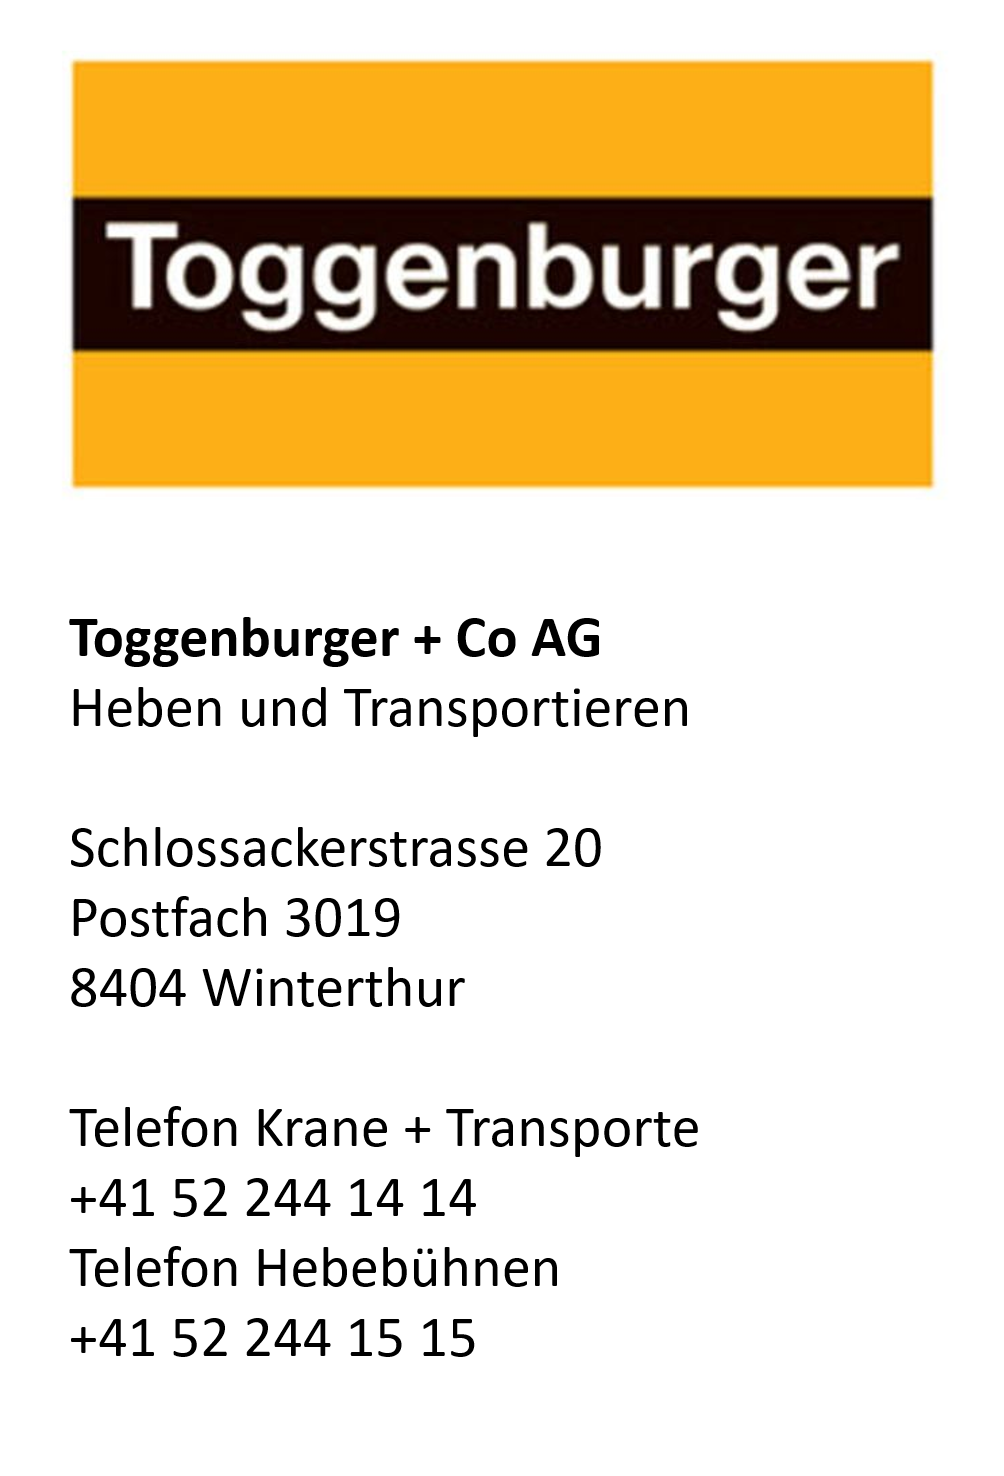 Toggenburger